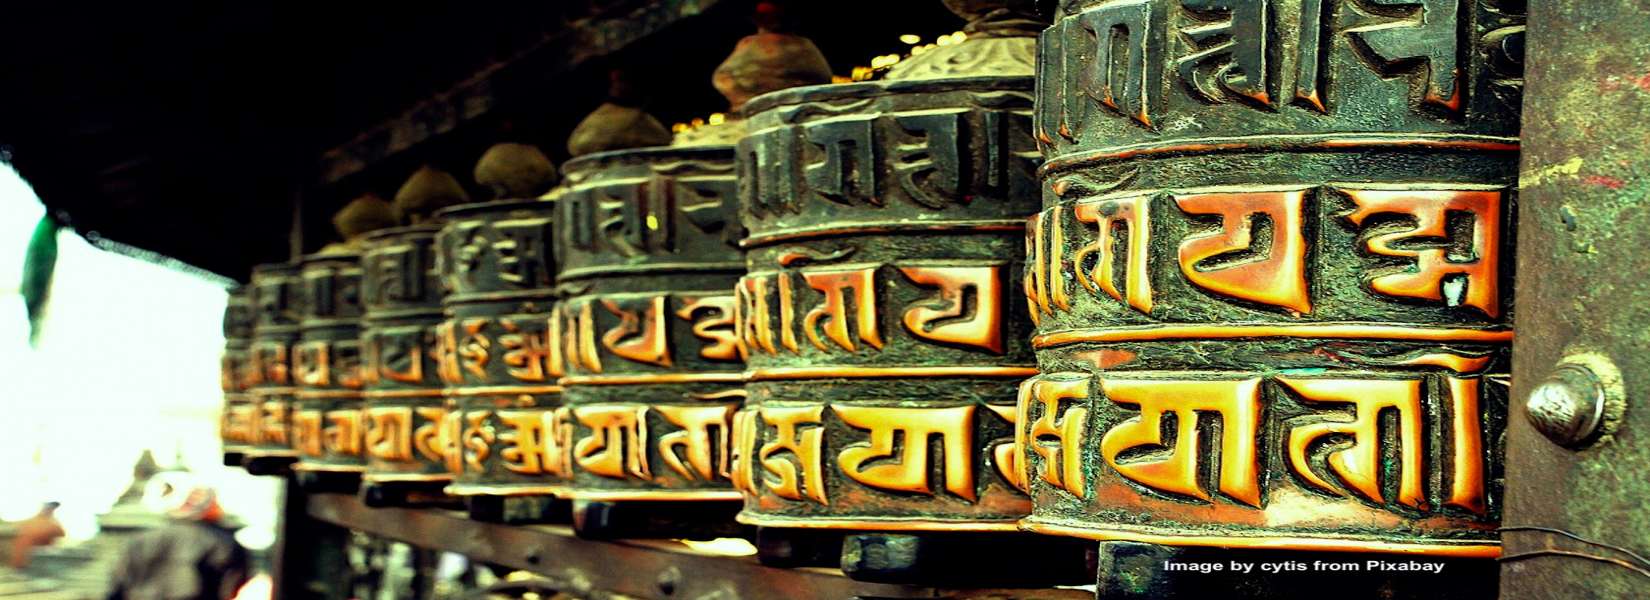 Best Place to Visit in Kathmandu